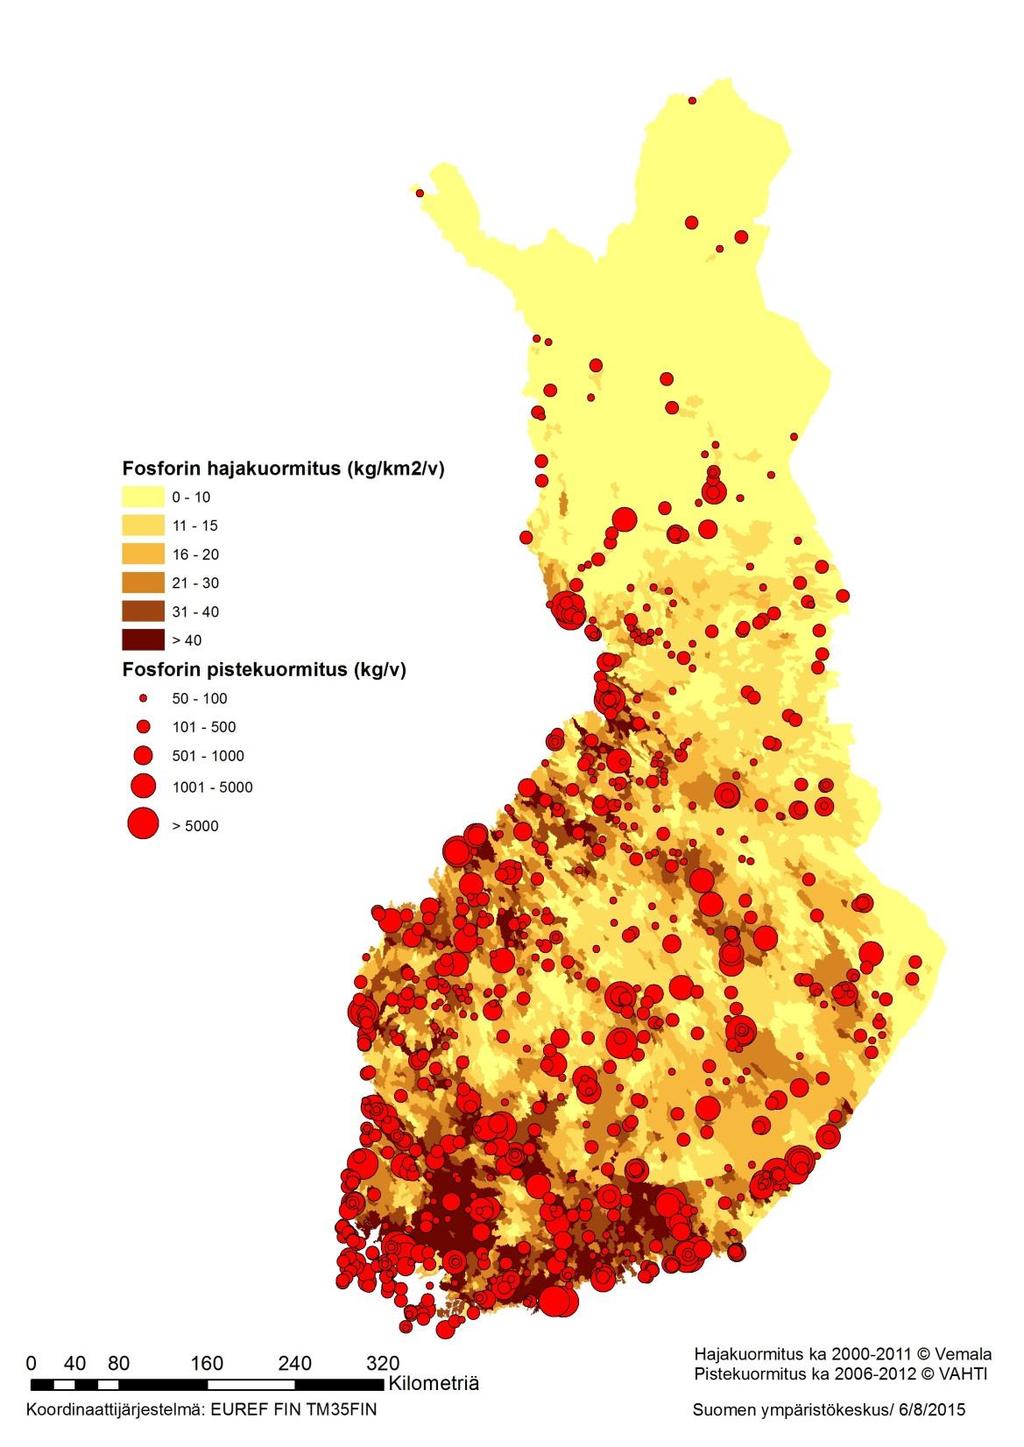 15.6.2015 Hajakuormitus Fosforin kuormitus koko Suomi (Vemala 2000-2011) 5 % 5 % 7 % 5 % 33